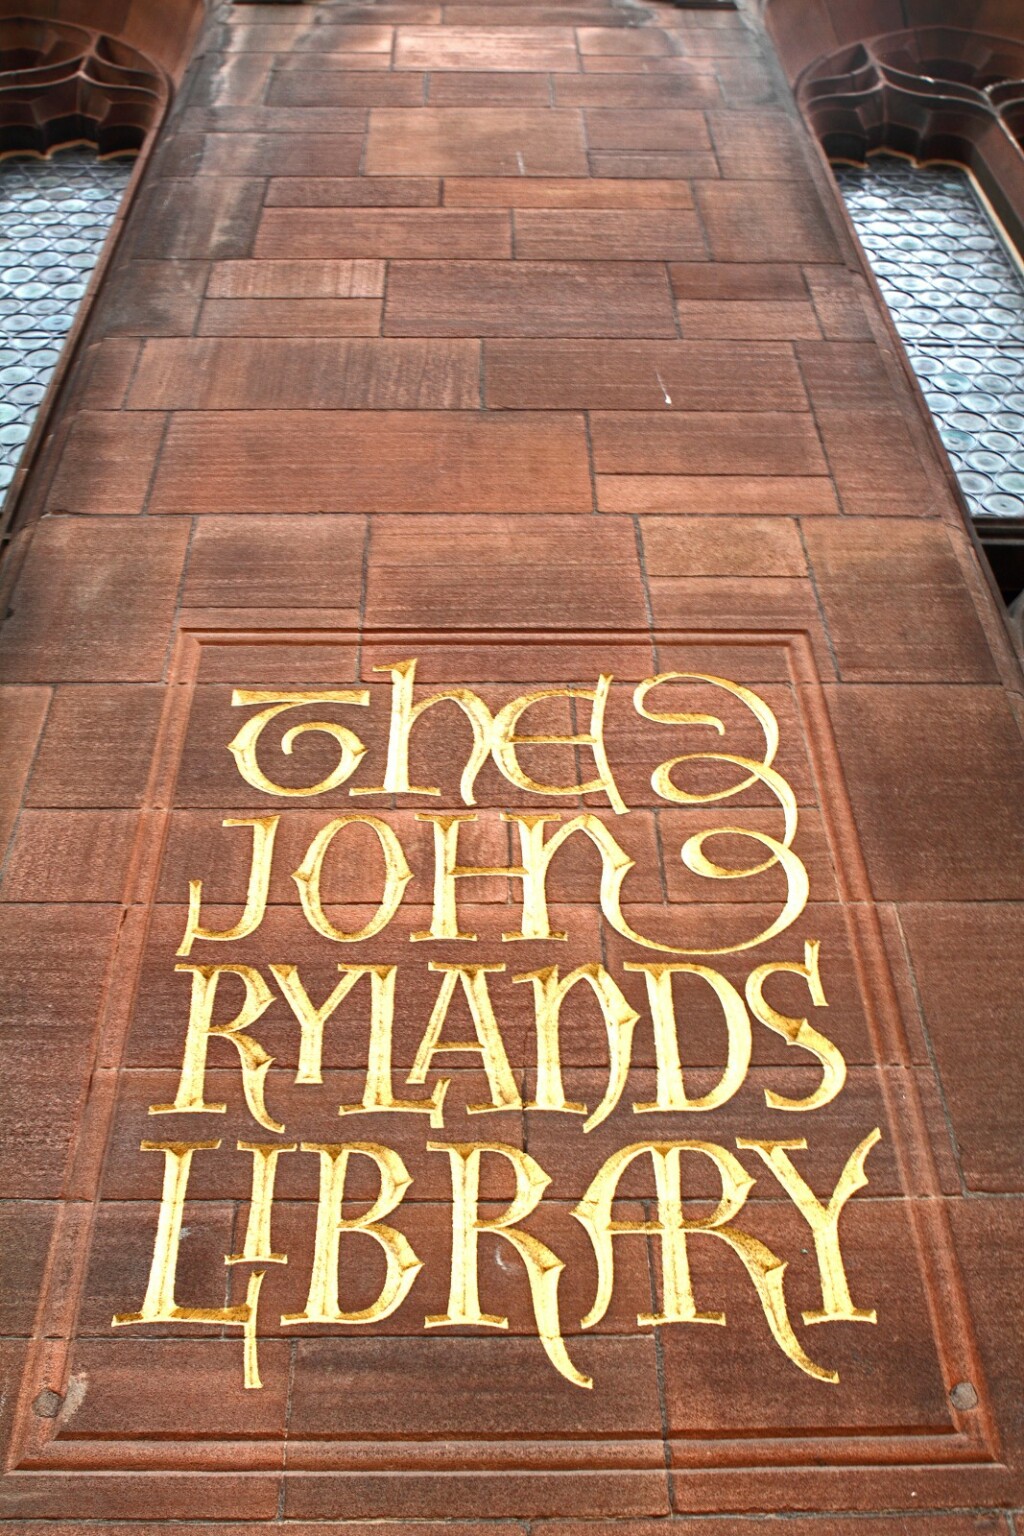 Knjižnica John Rylands